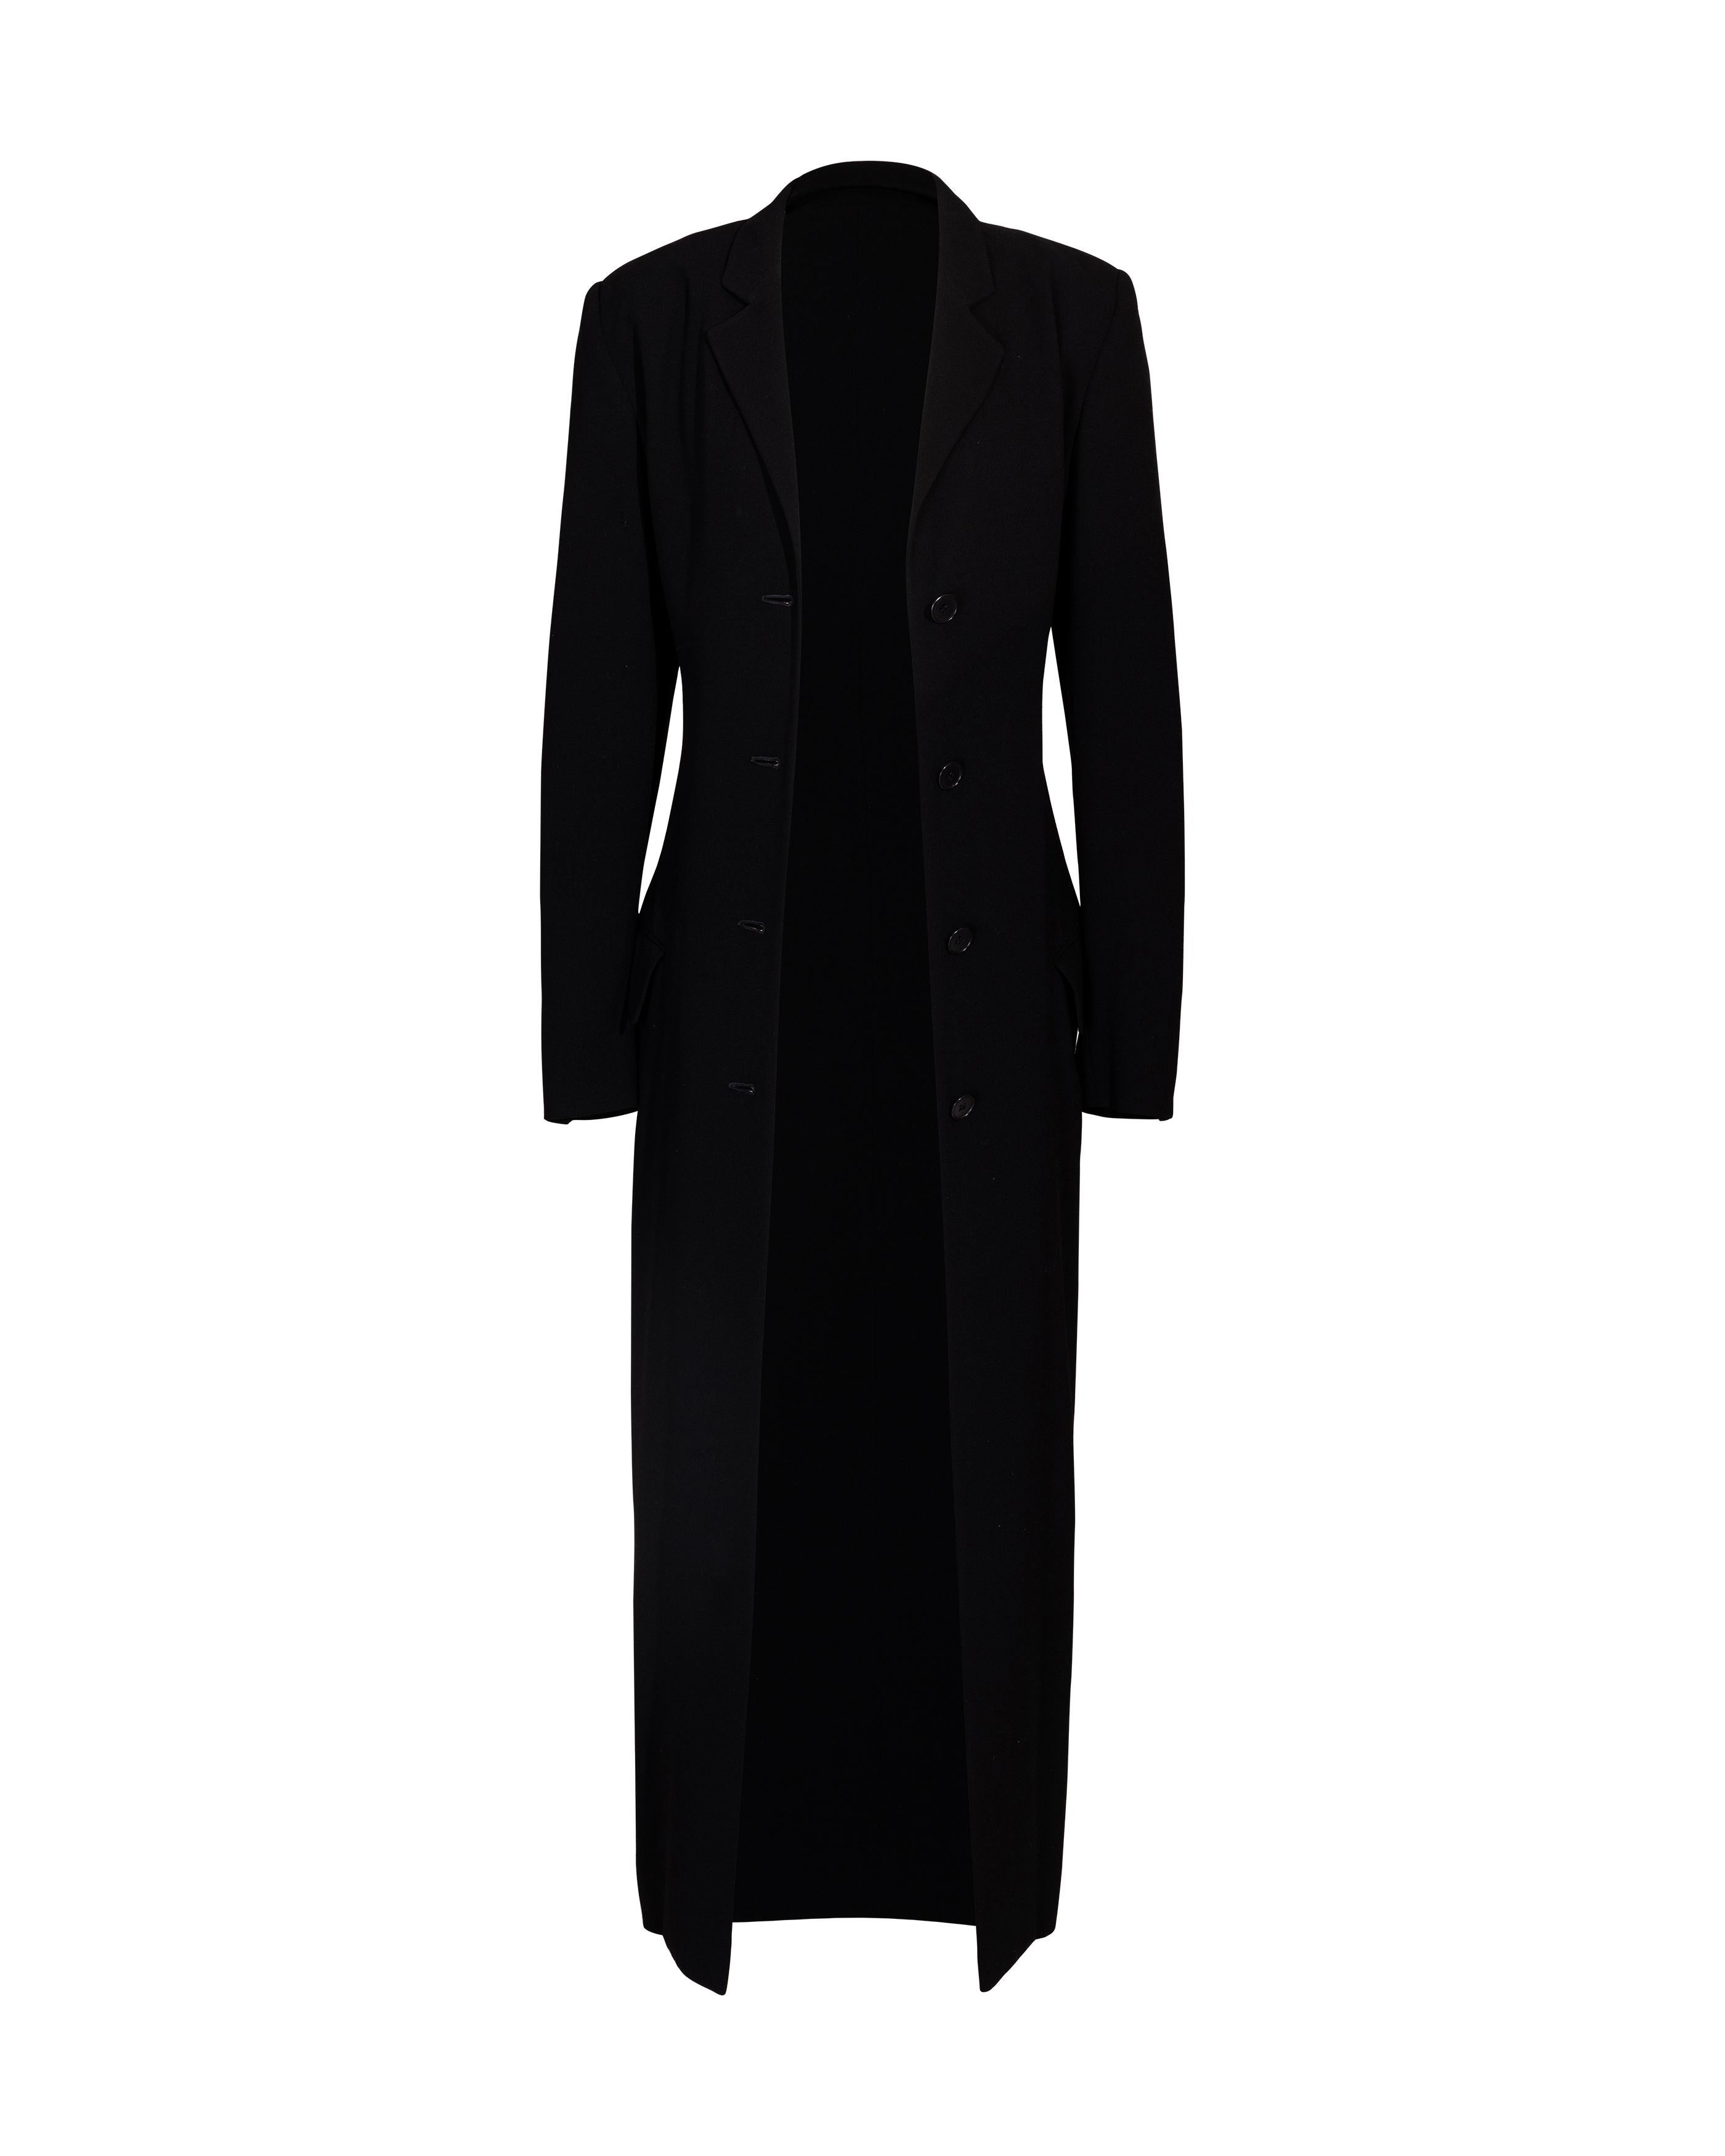 S/S 1994 Calvin Klein Black Silk Crepe Long Coat For Sale 2